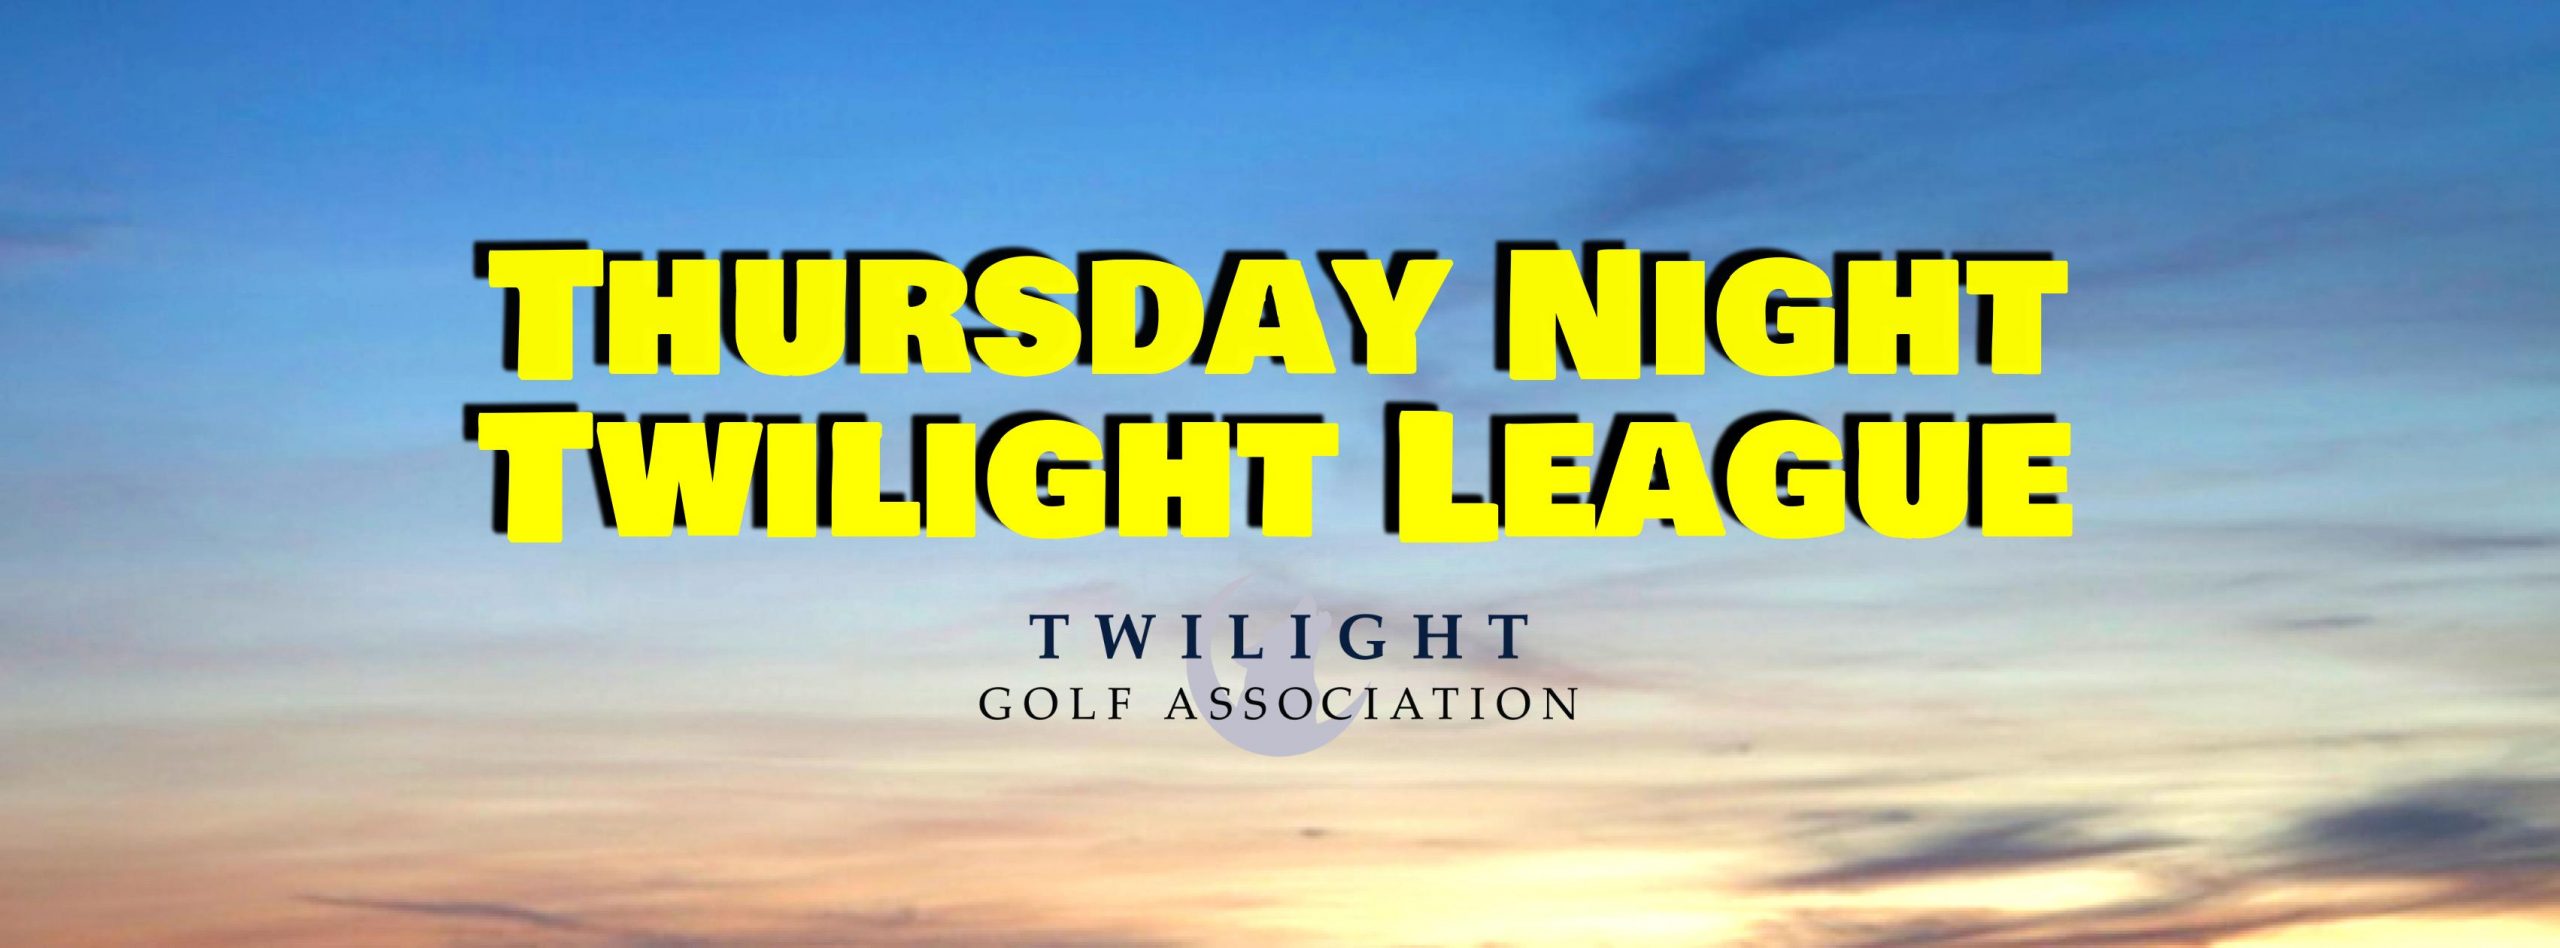 Thursday Twilight League at The Legend At Arrowhead Golf Course